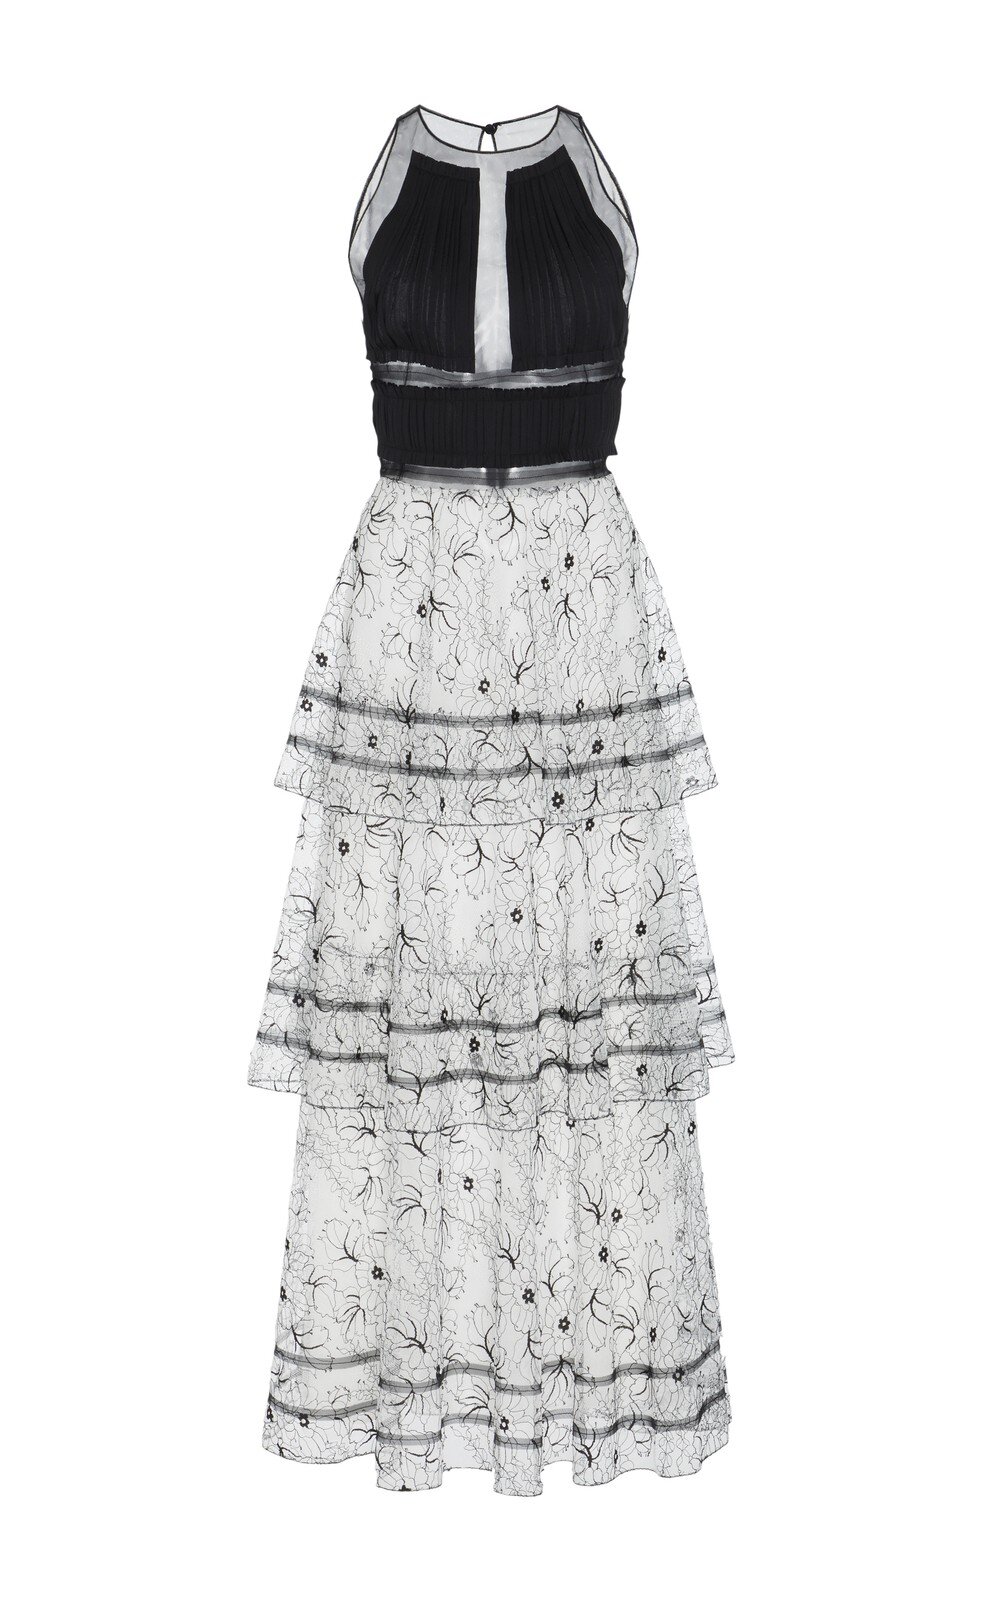 large_carolina-herrera-black-white-sleeveless-floral-lace-tiered-dress.jpg